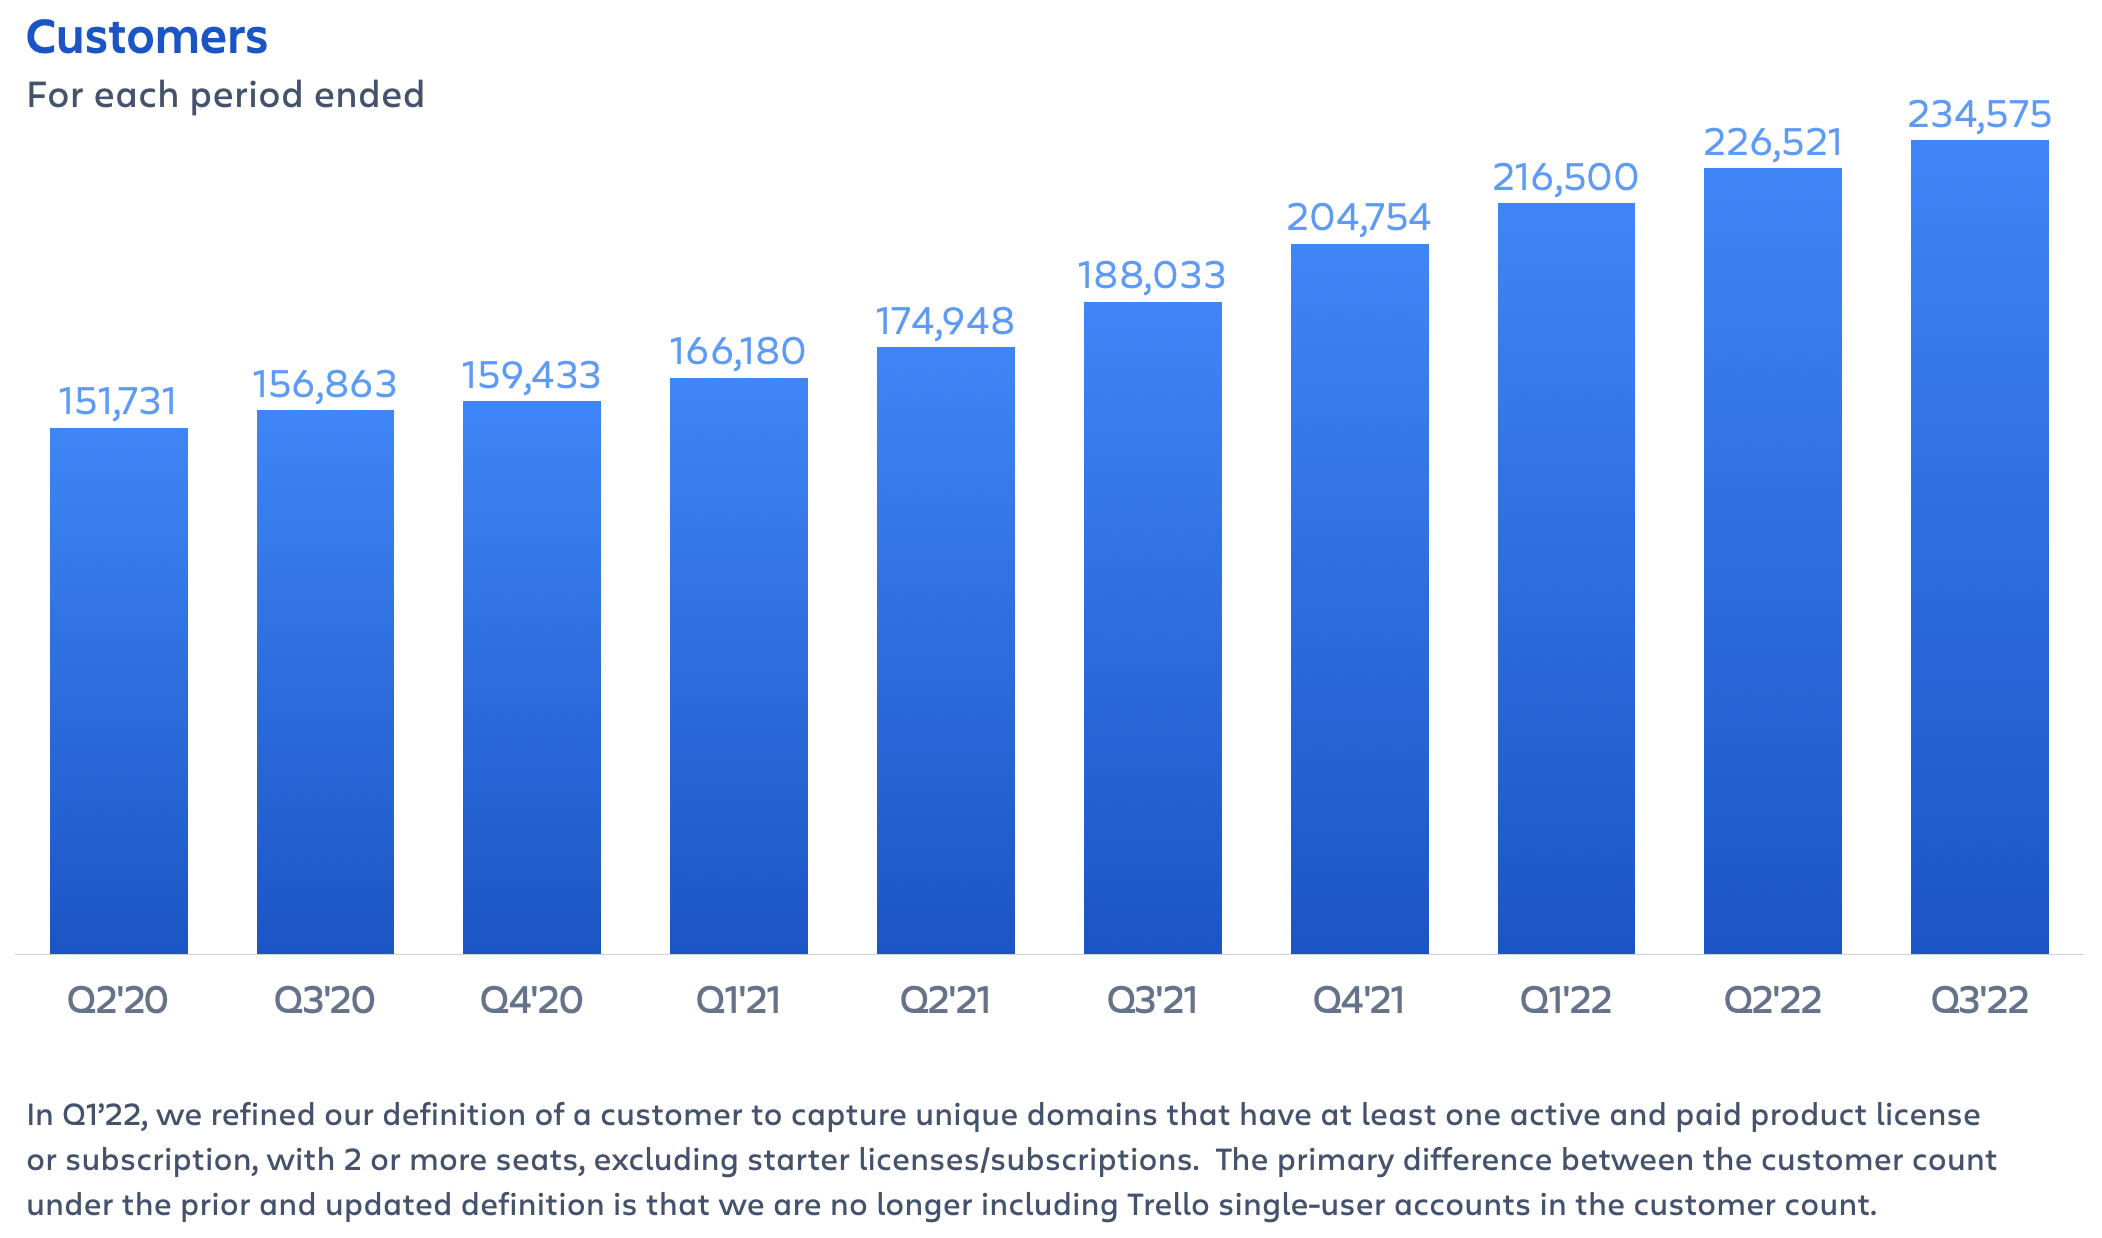 Atlassian customer growth as of Q3FY22